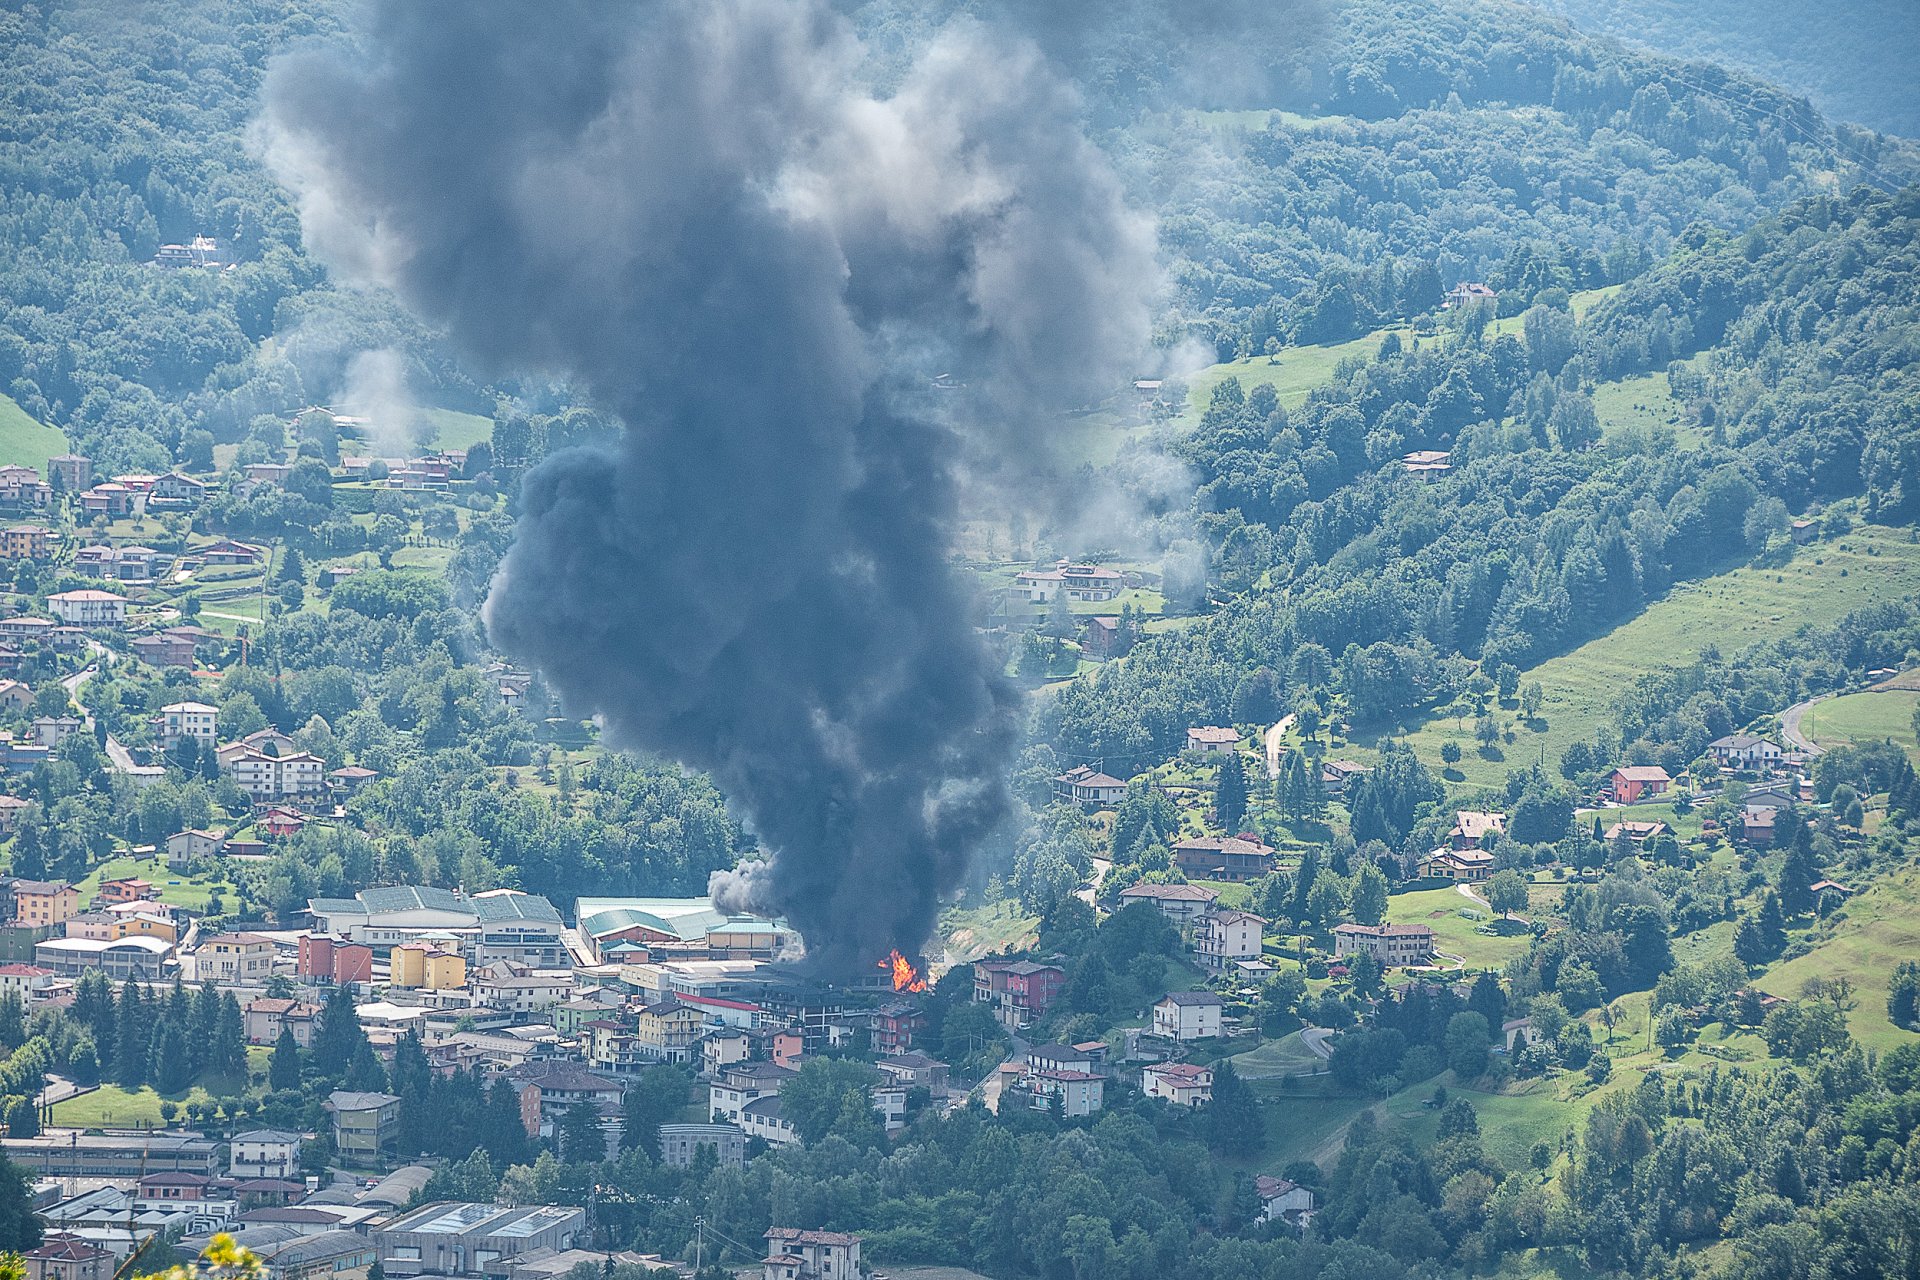 DSC_1266-1- Incendio in Valgandino - 07-08-2020 - © Valerio Rota Nodari